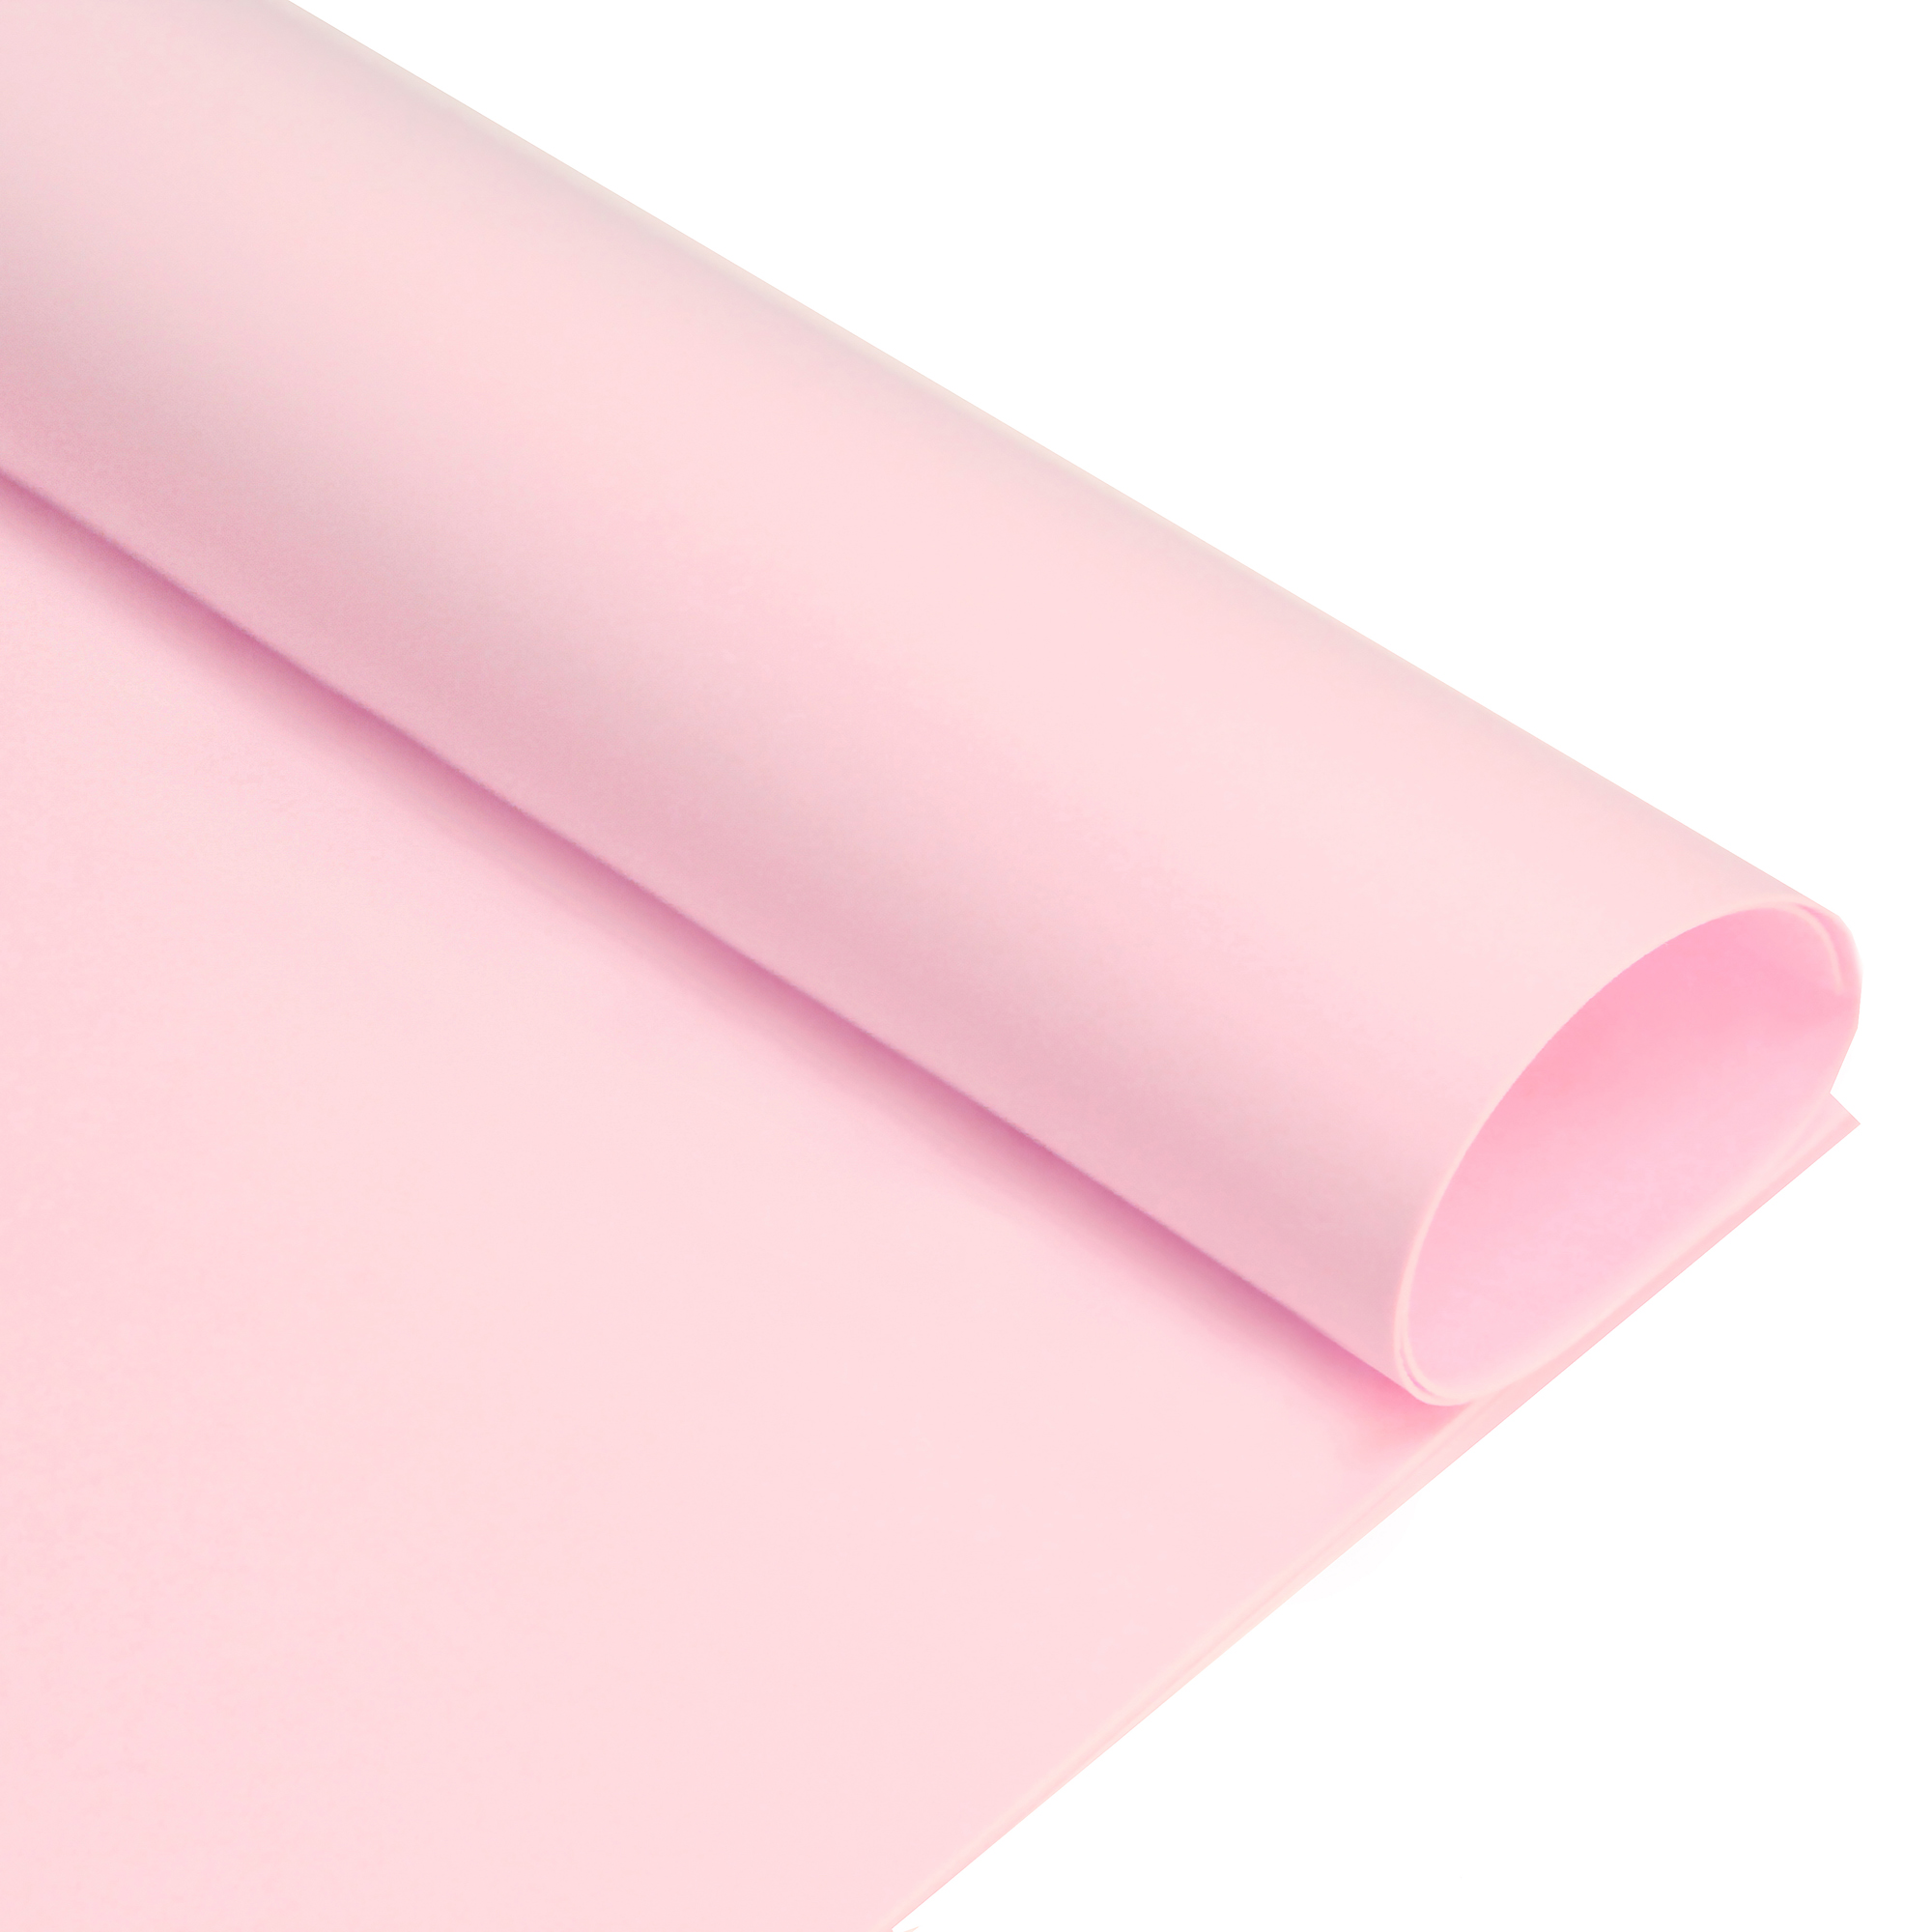 VR-FE7 42T10-S50X50-PWF017 VELOUR Rosa pastello-Пастельно-розовый Фоамиран велюровый 1мм лист 50х50см. 20л-пач.